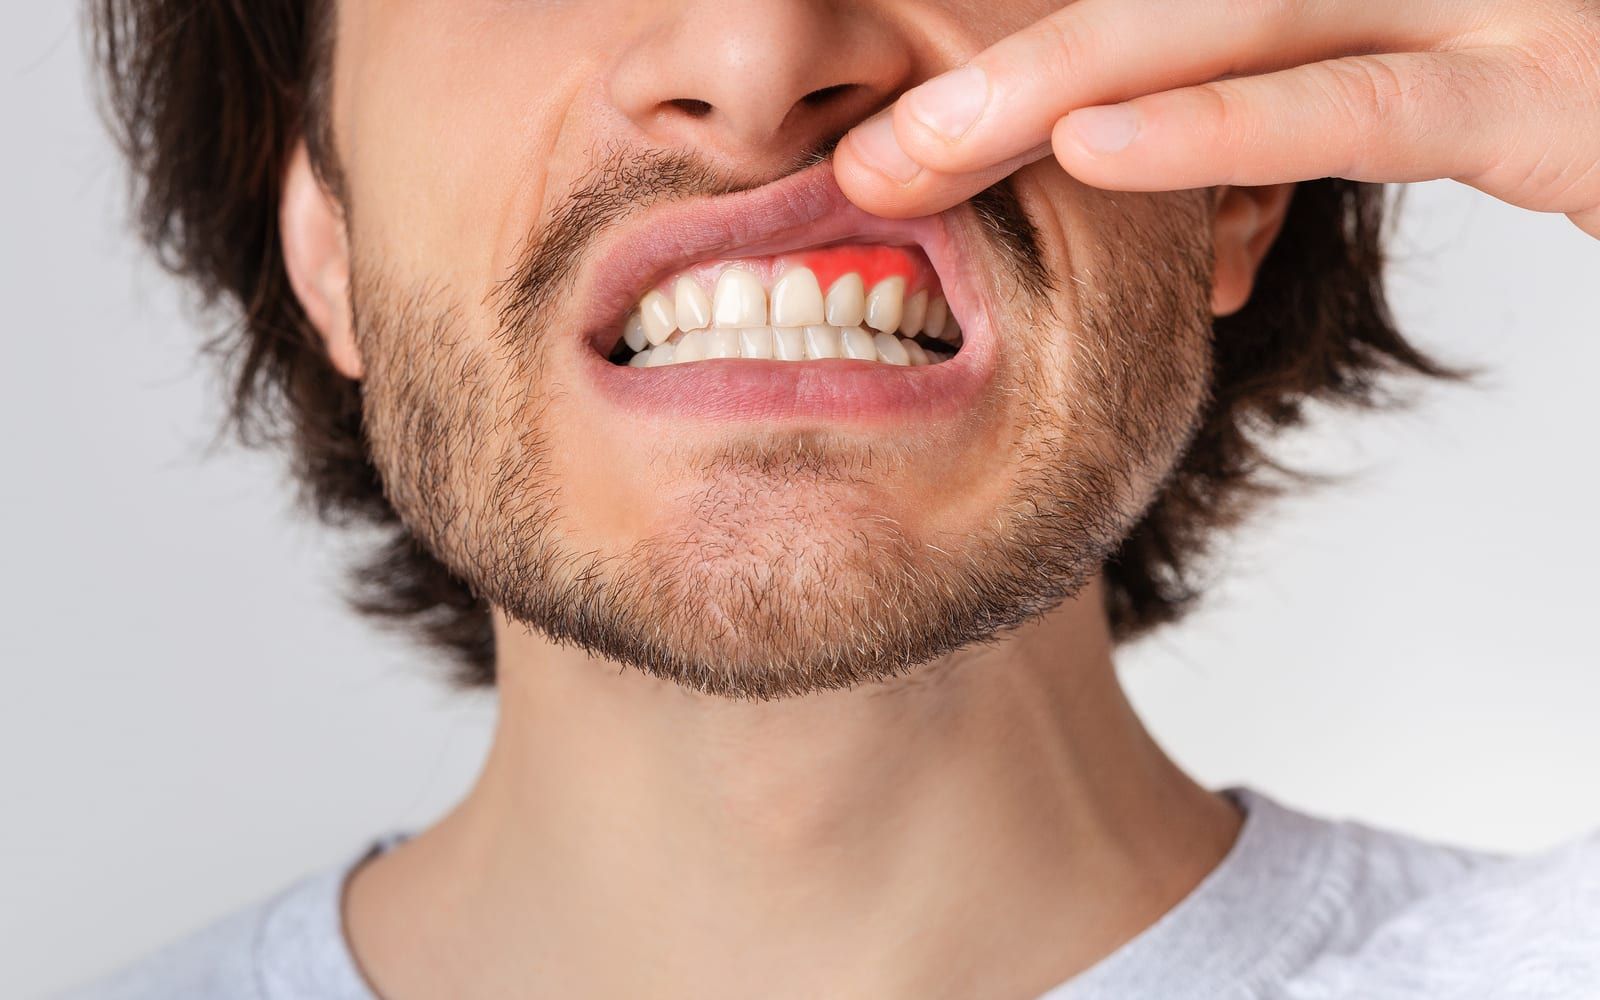 Man revealing gums with periodontal disease